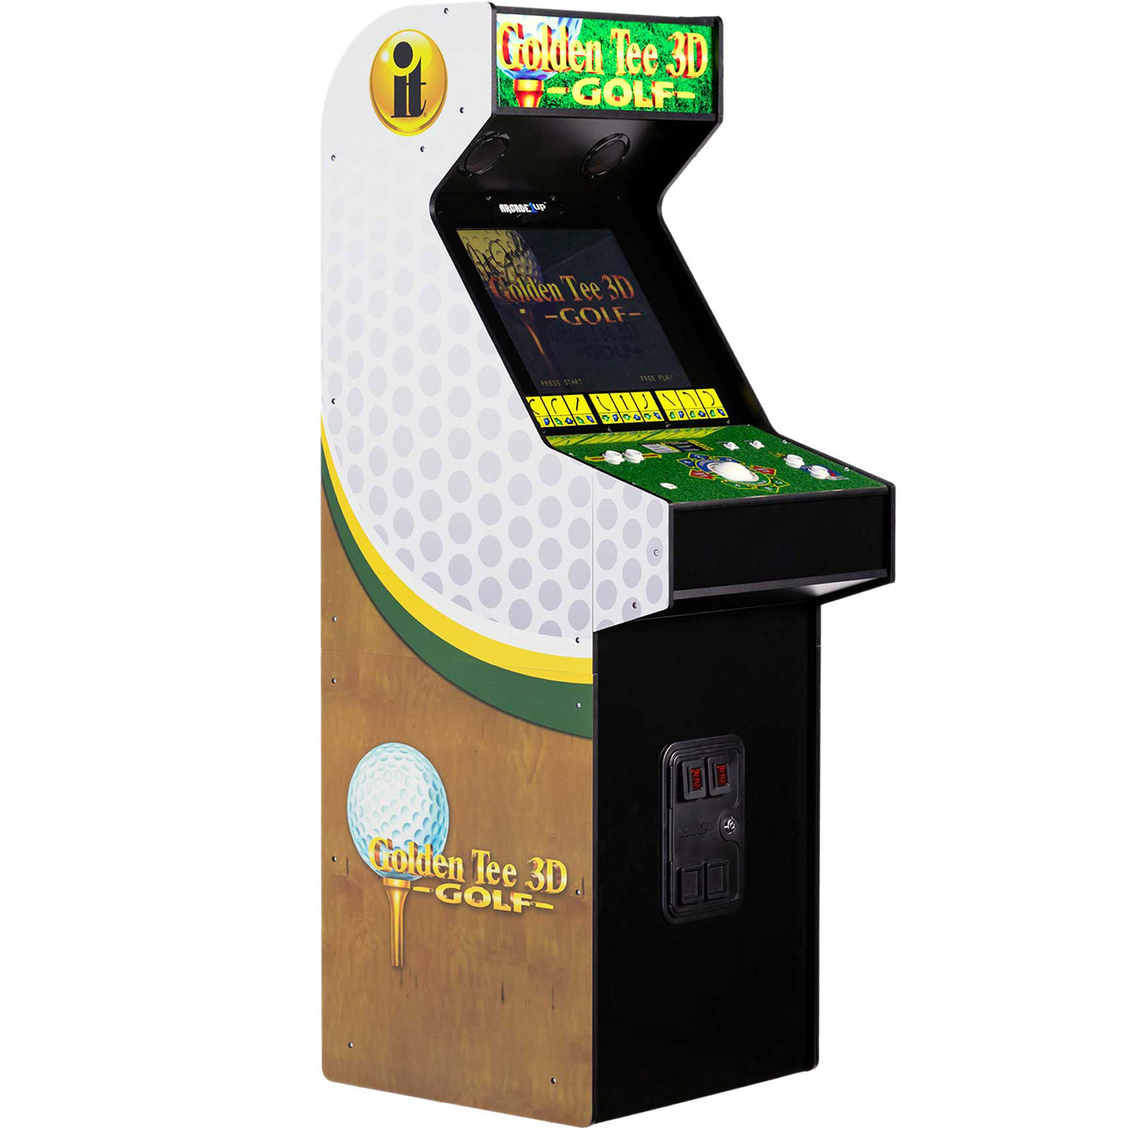 Arcade 1UP Golden Tee 3D Arcade Machine - Image 1 of 9